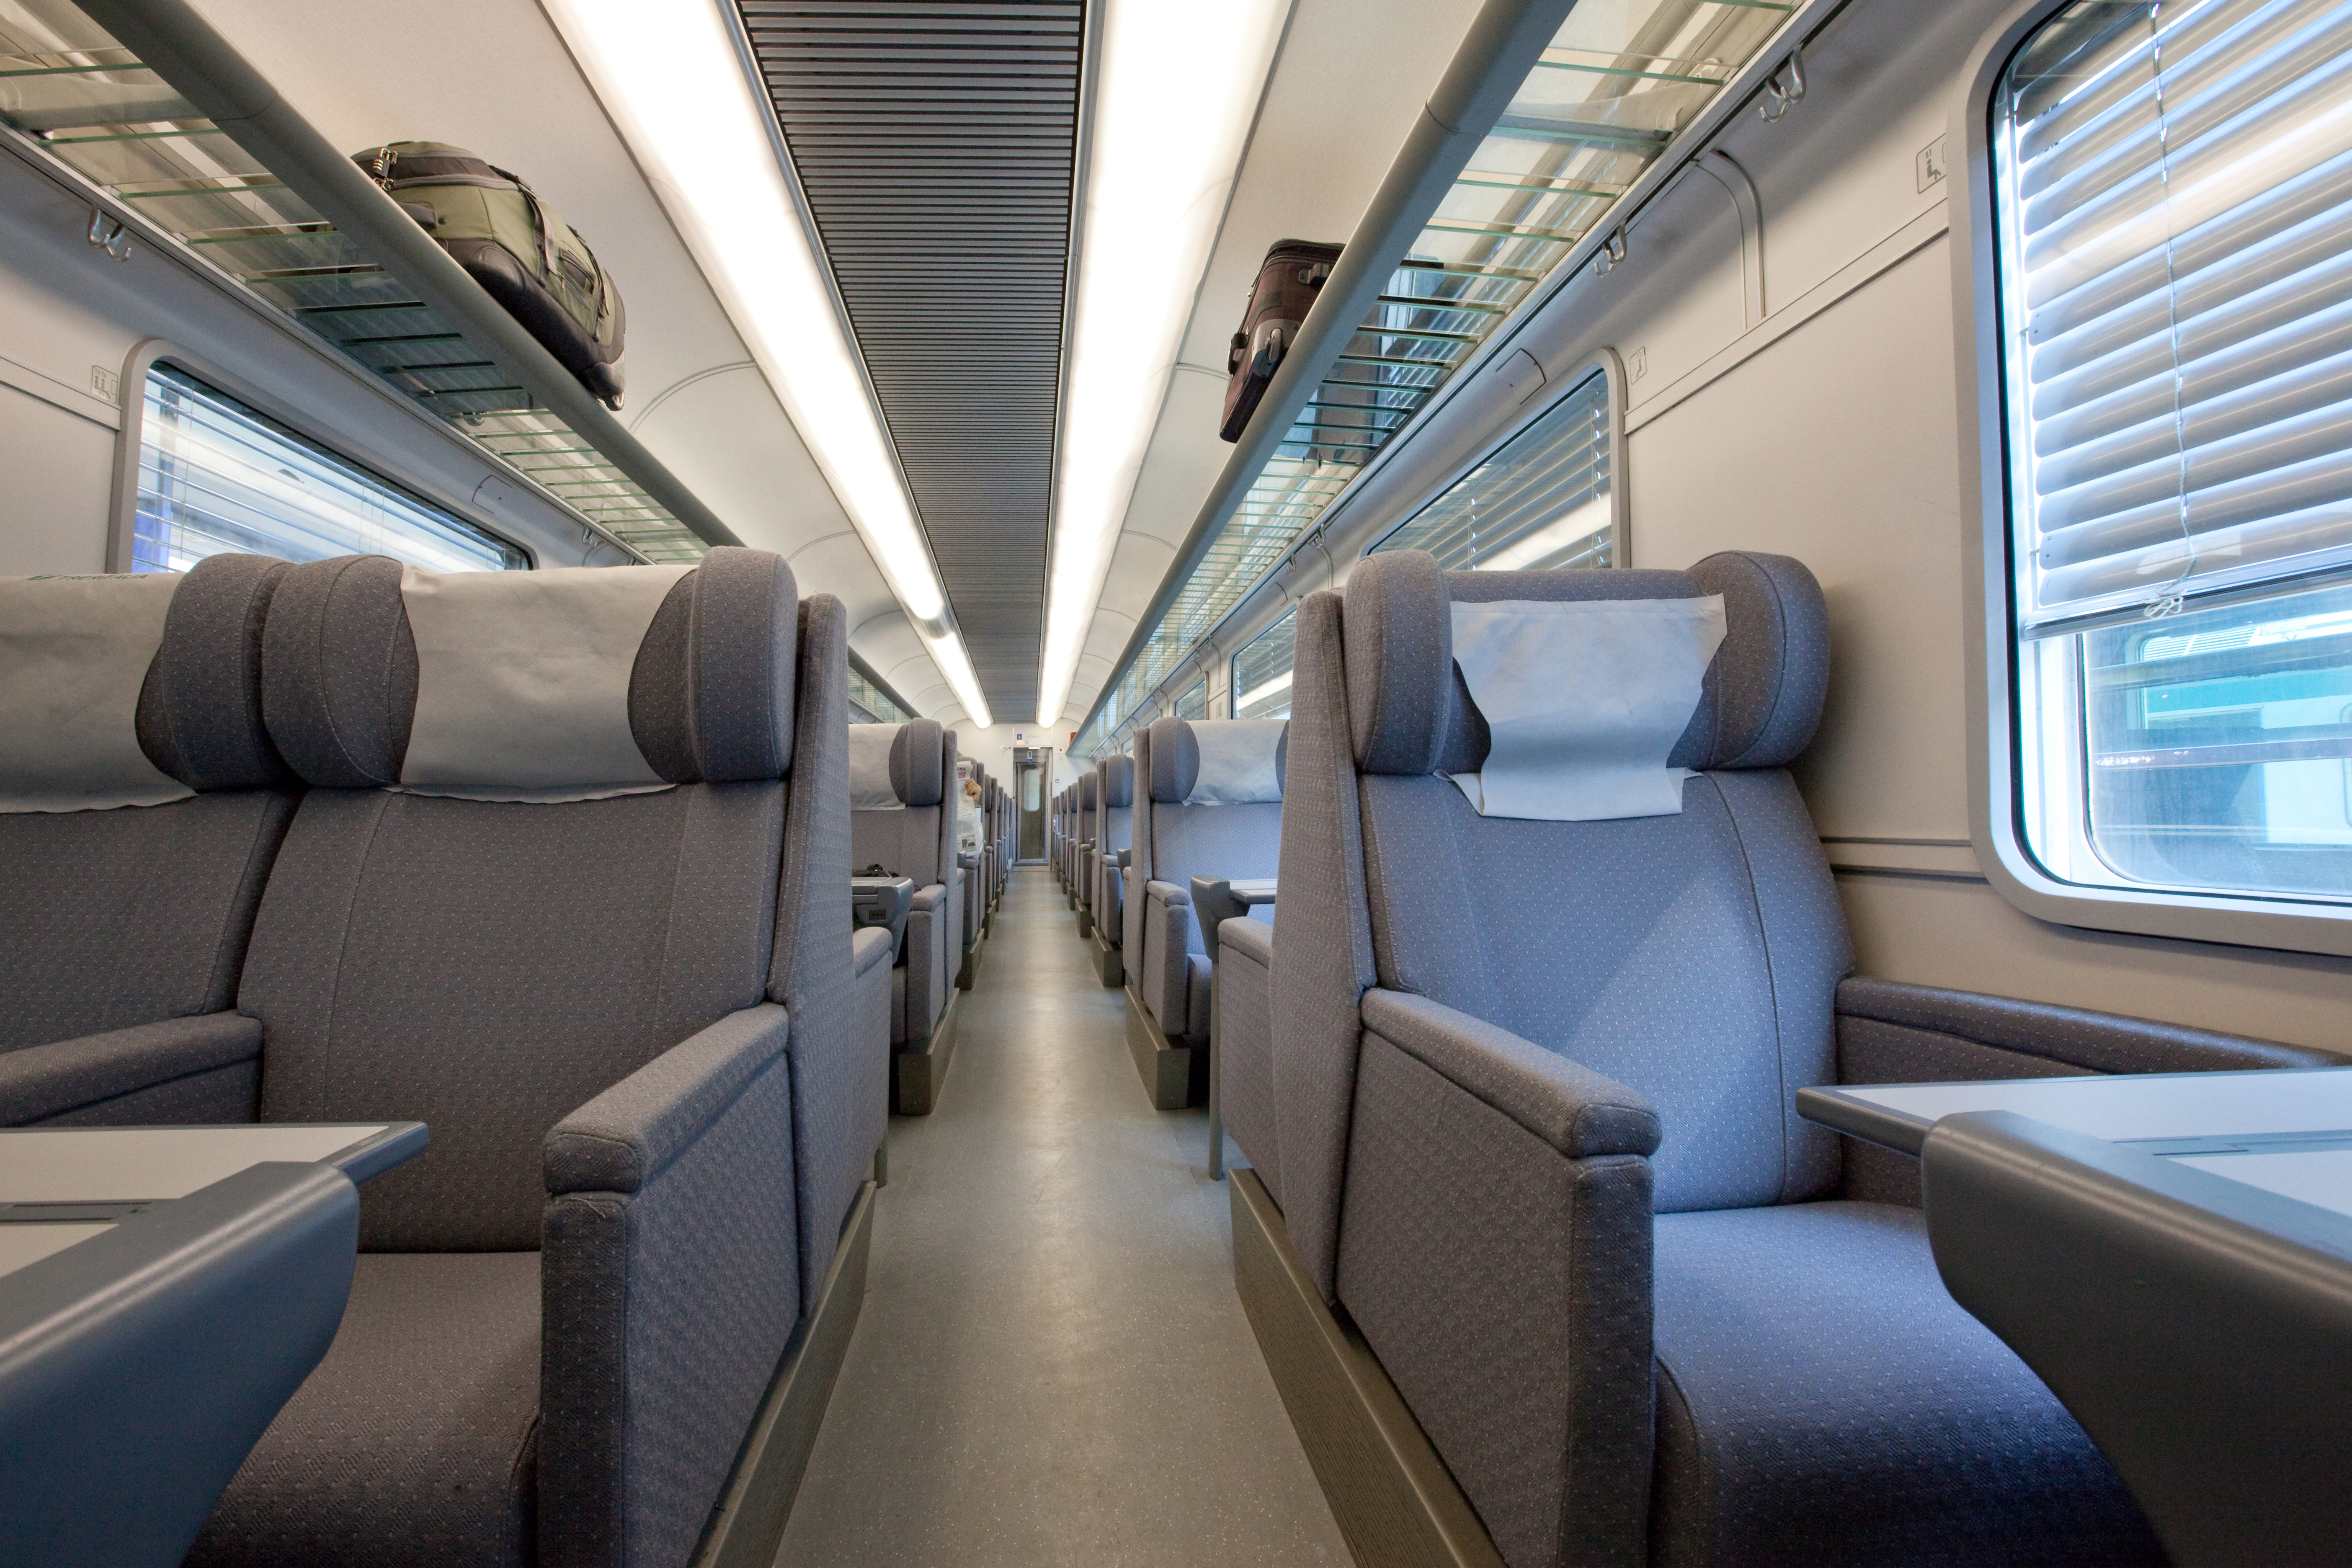 Une cabine de train de première classe vide | Source : Shutterstock